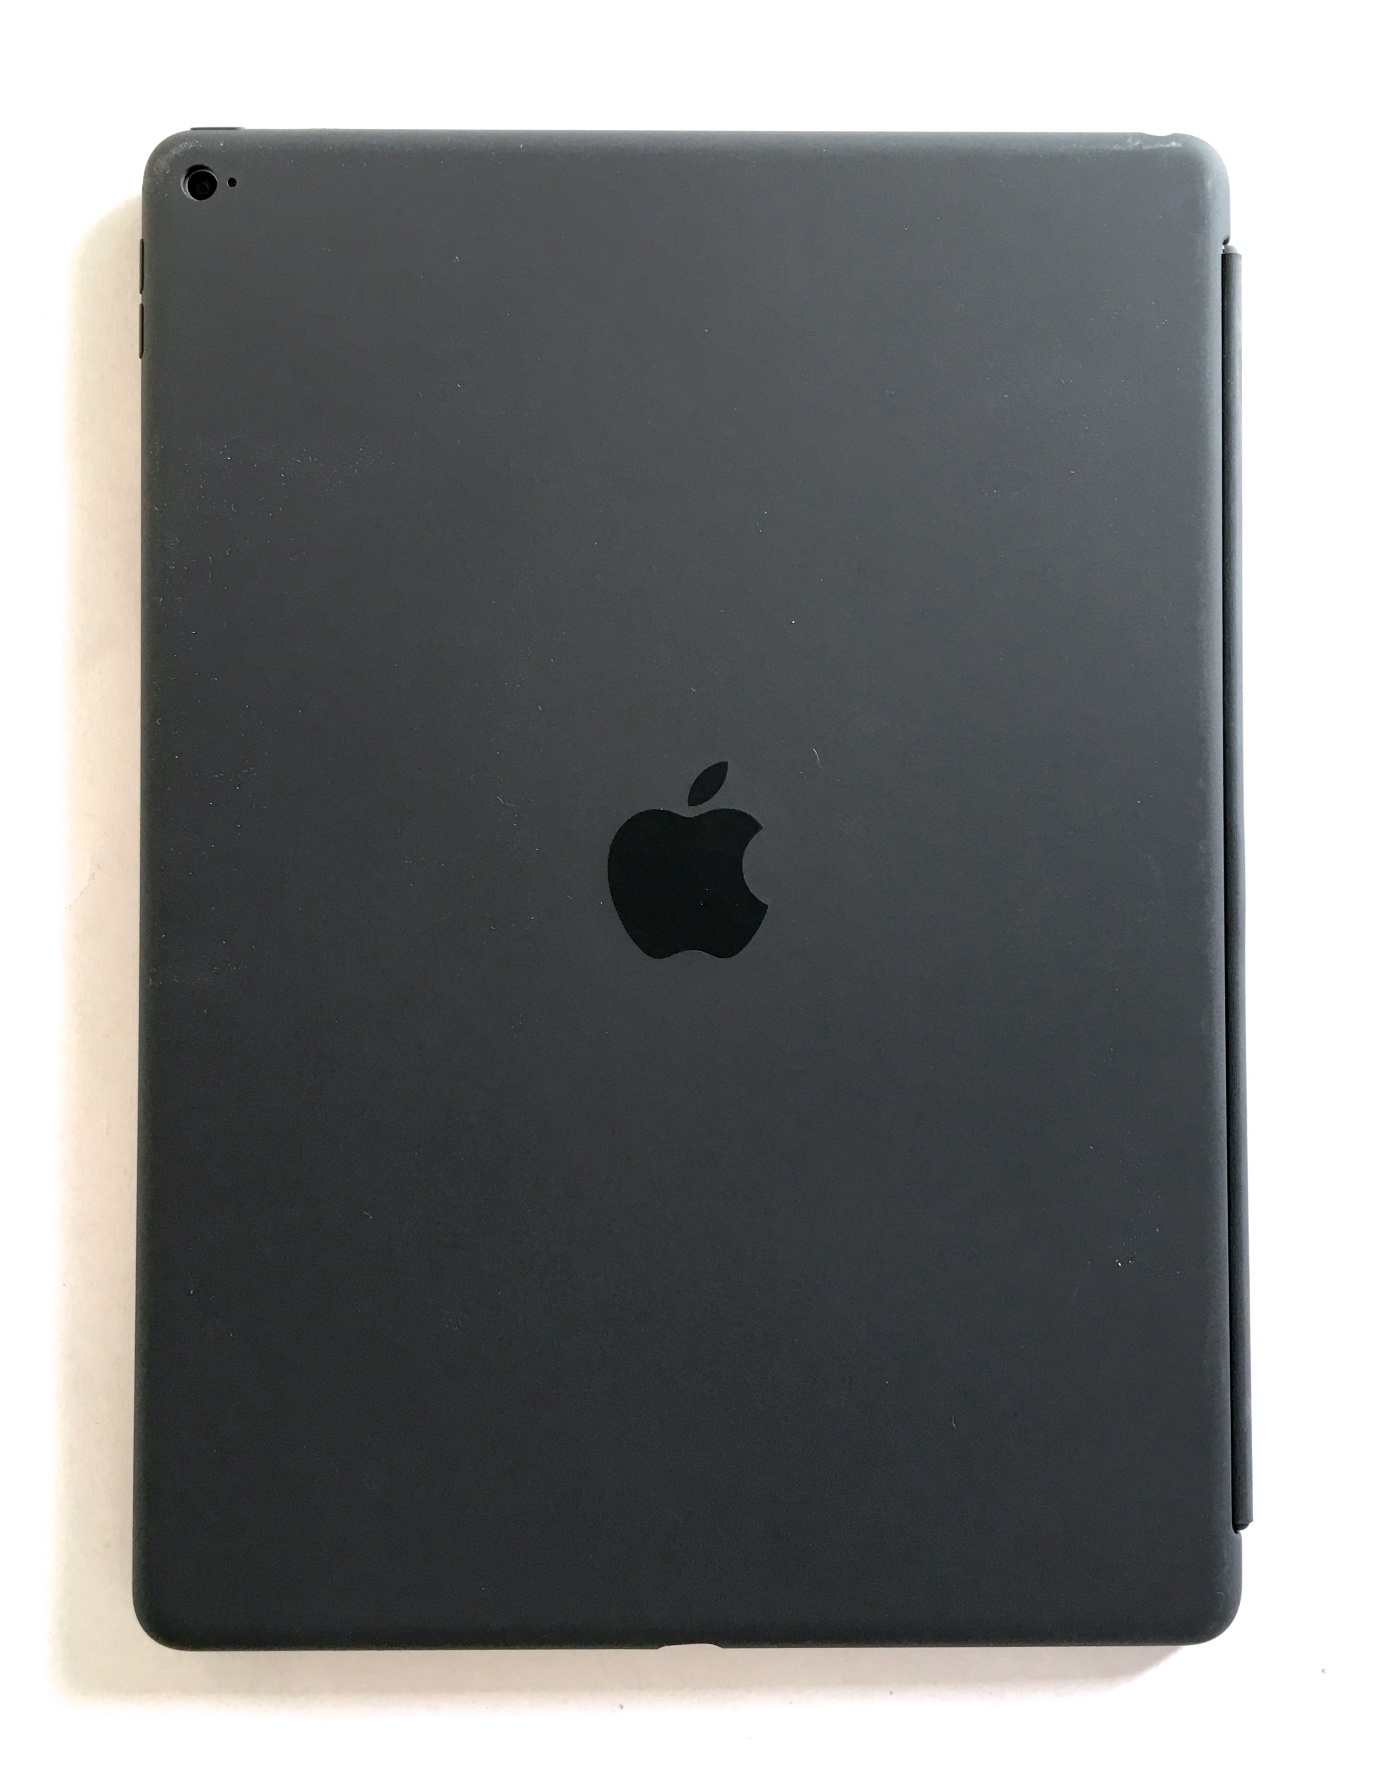 iPad case